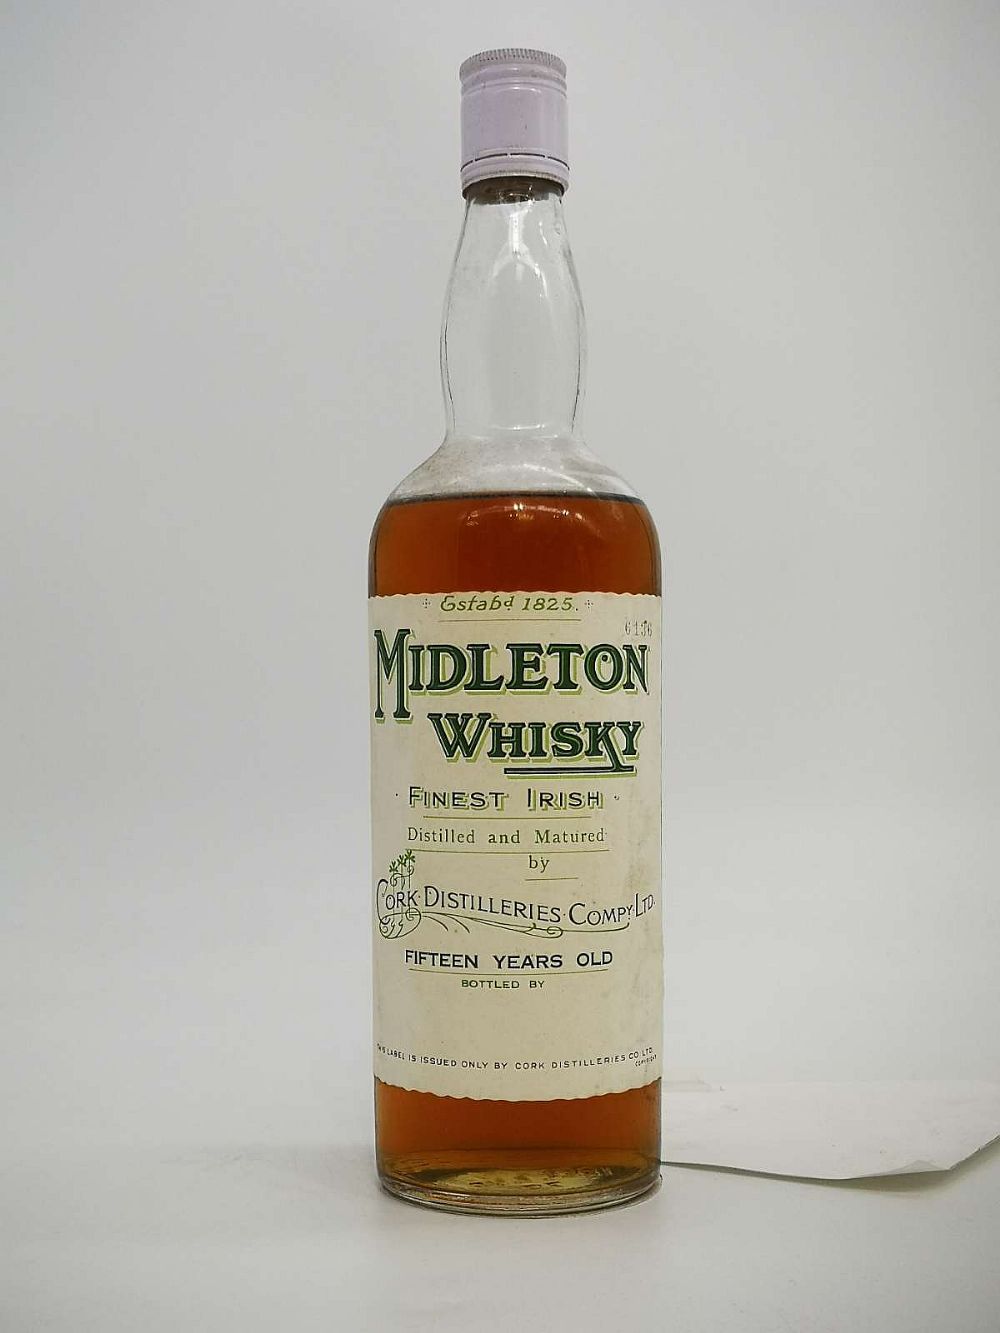 Midleton Whisky 15 year old Finest Irish, Cork Distilleries Compy. Ltd.